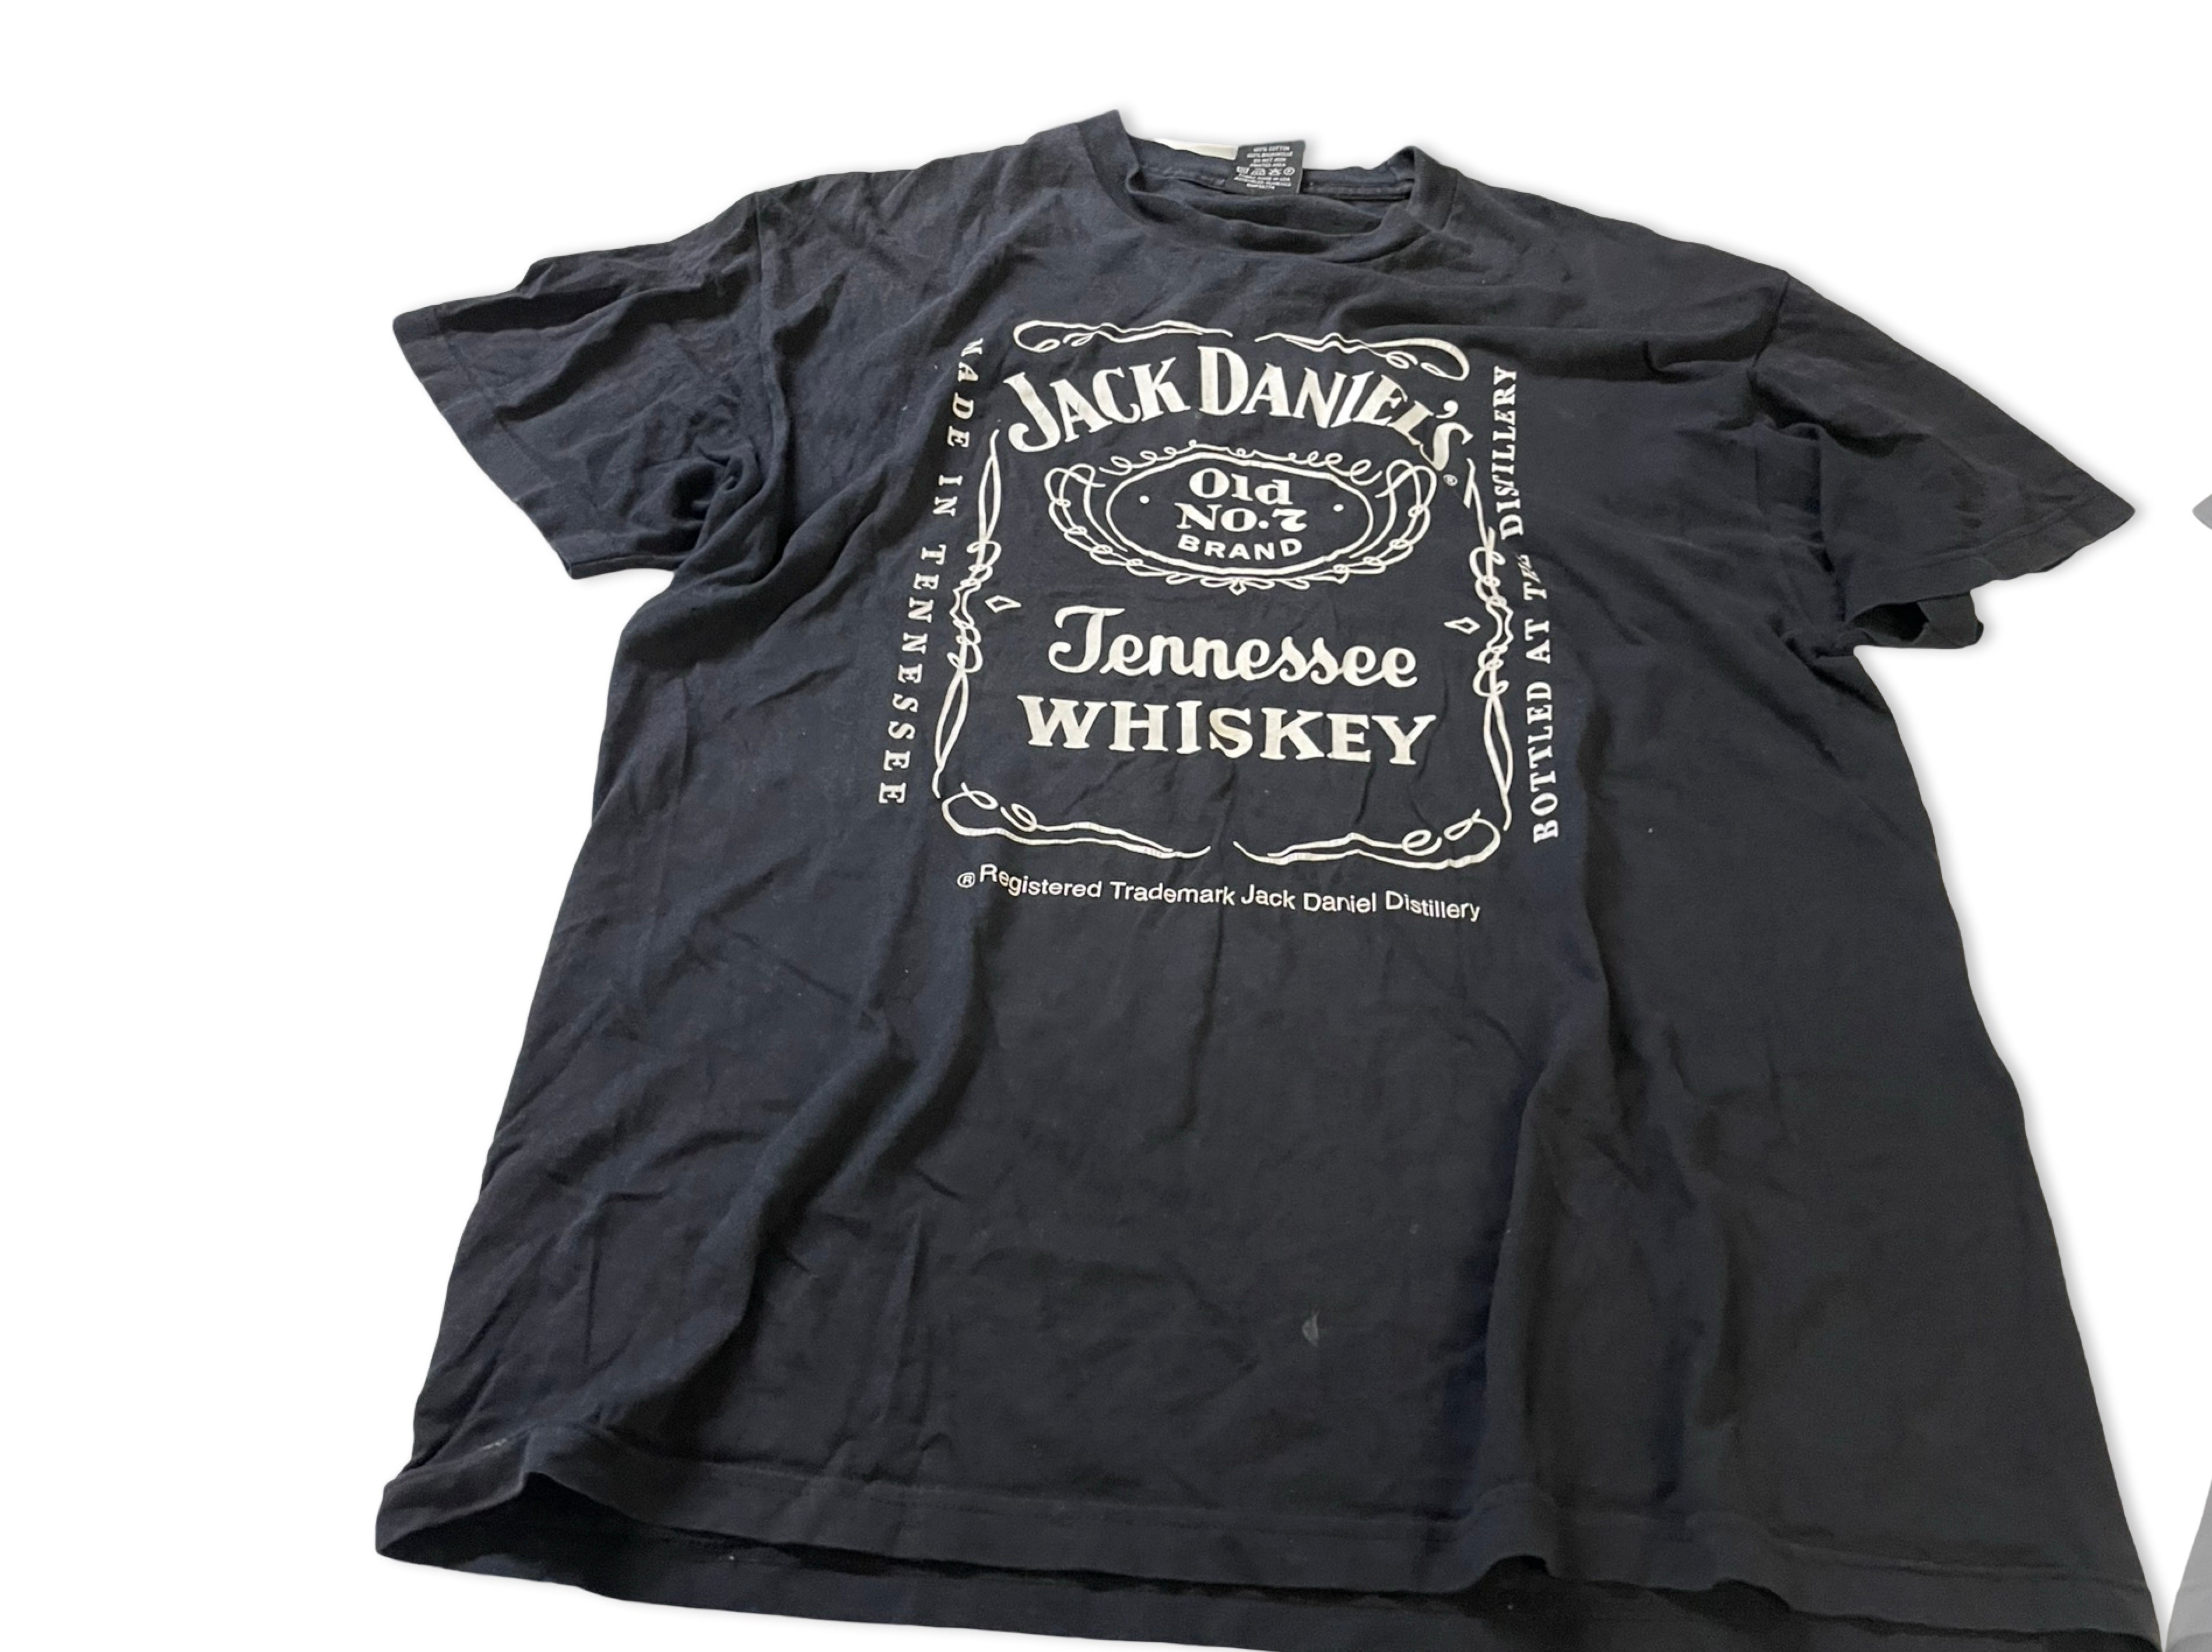 Vintage t shirt, 1980s t shirt, Jack Daniels t shirt, whiskey t shirt, motorcycle t shirt, black t shirt, vintage clothing, size XL